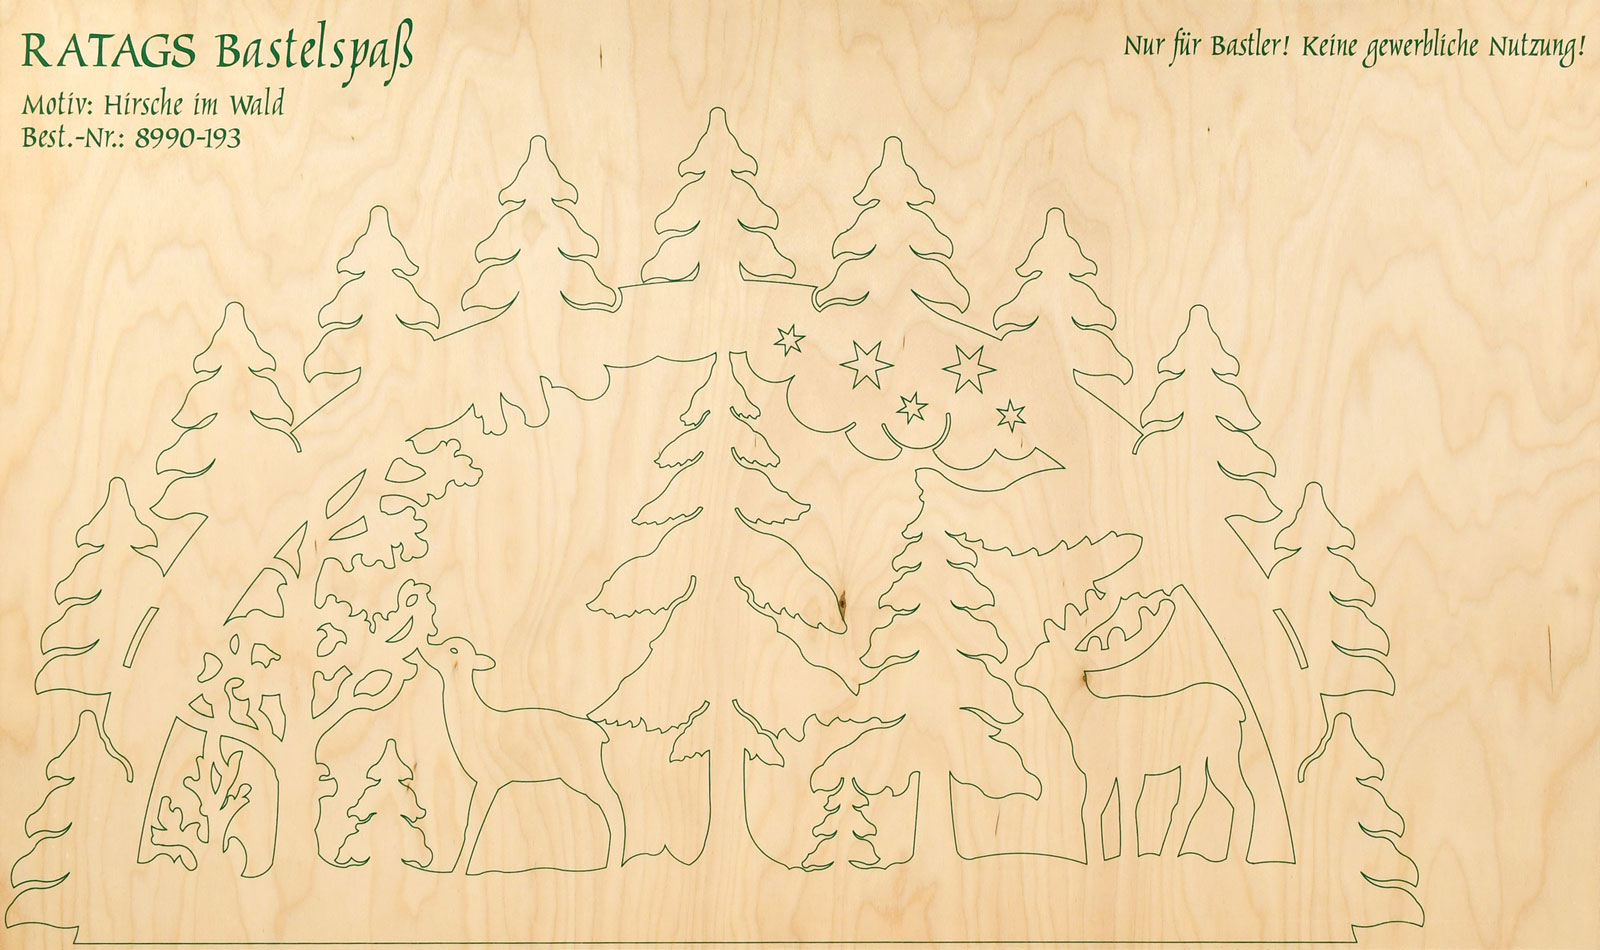 2 Motivsperrholzplatten, Hirsche im Wald groß, zum Selbstaussägen